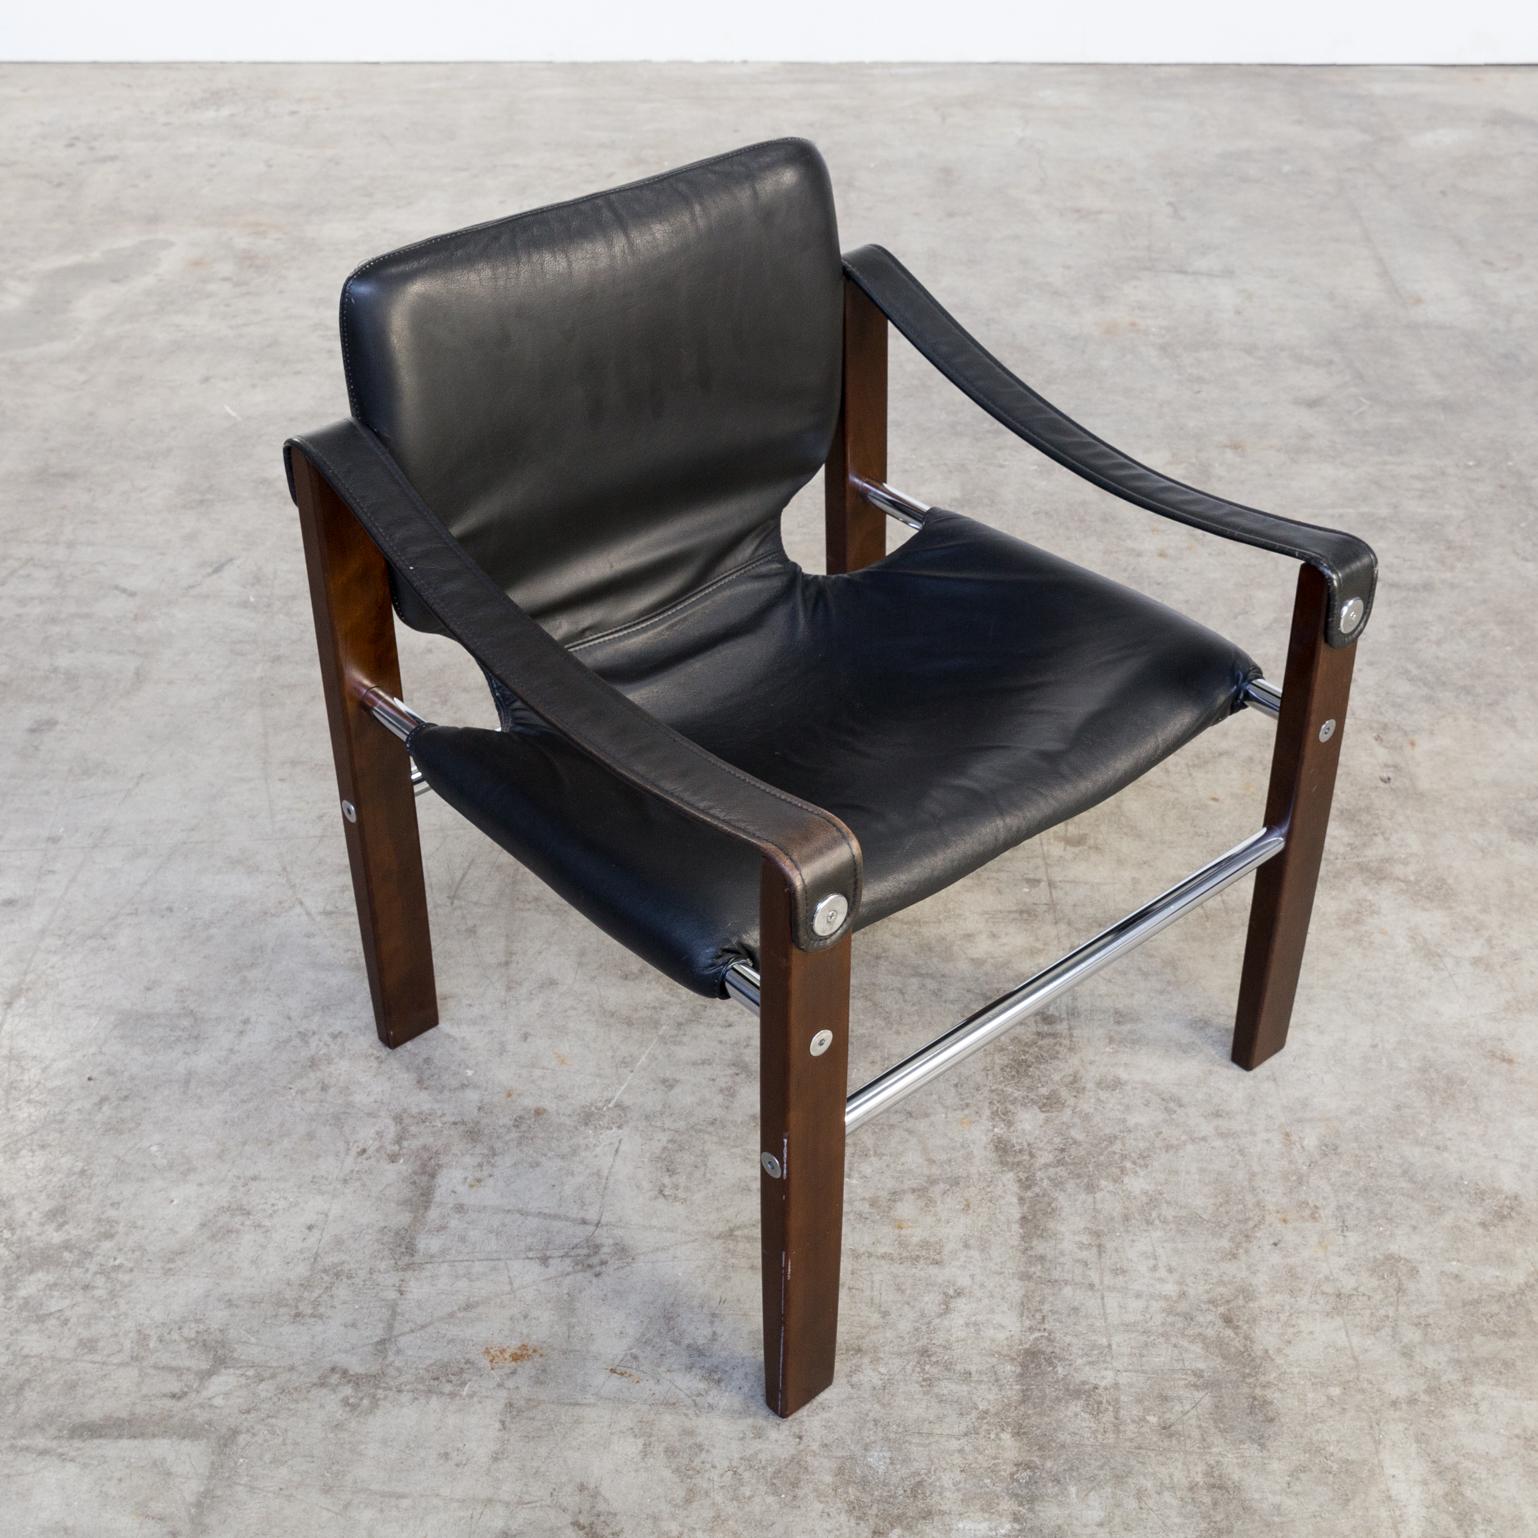 1970s Maurice Burke ‘Chelsea’ Black Leather Fauteuil/Safari Chair for Pozza Set For Sale 3